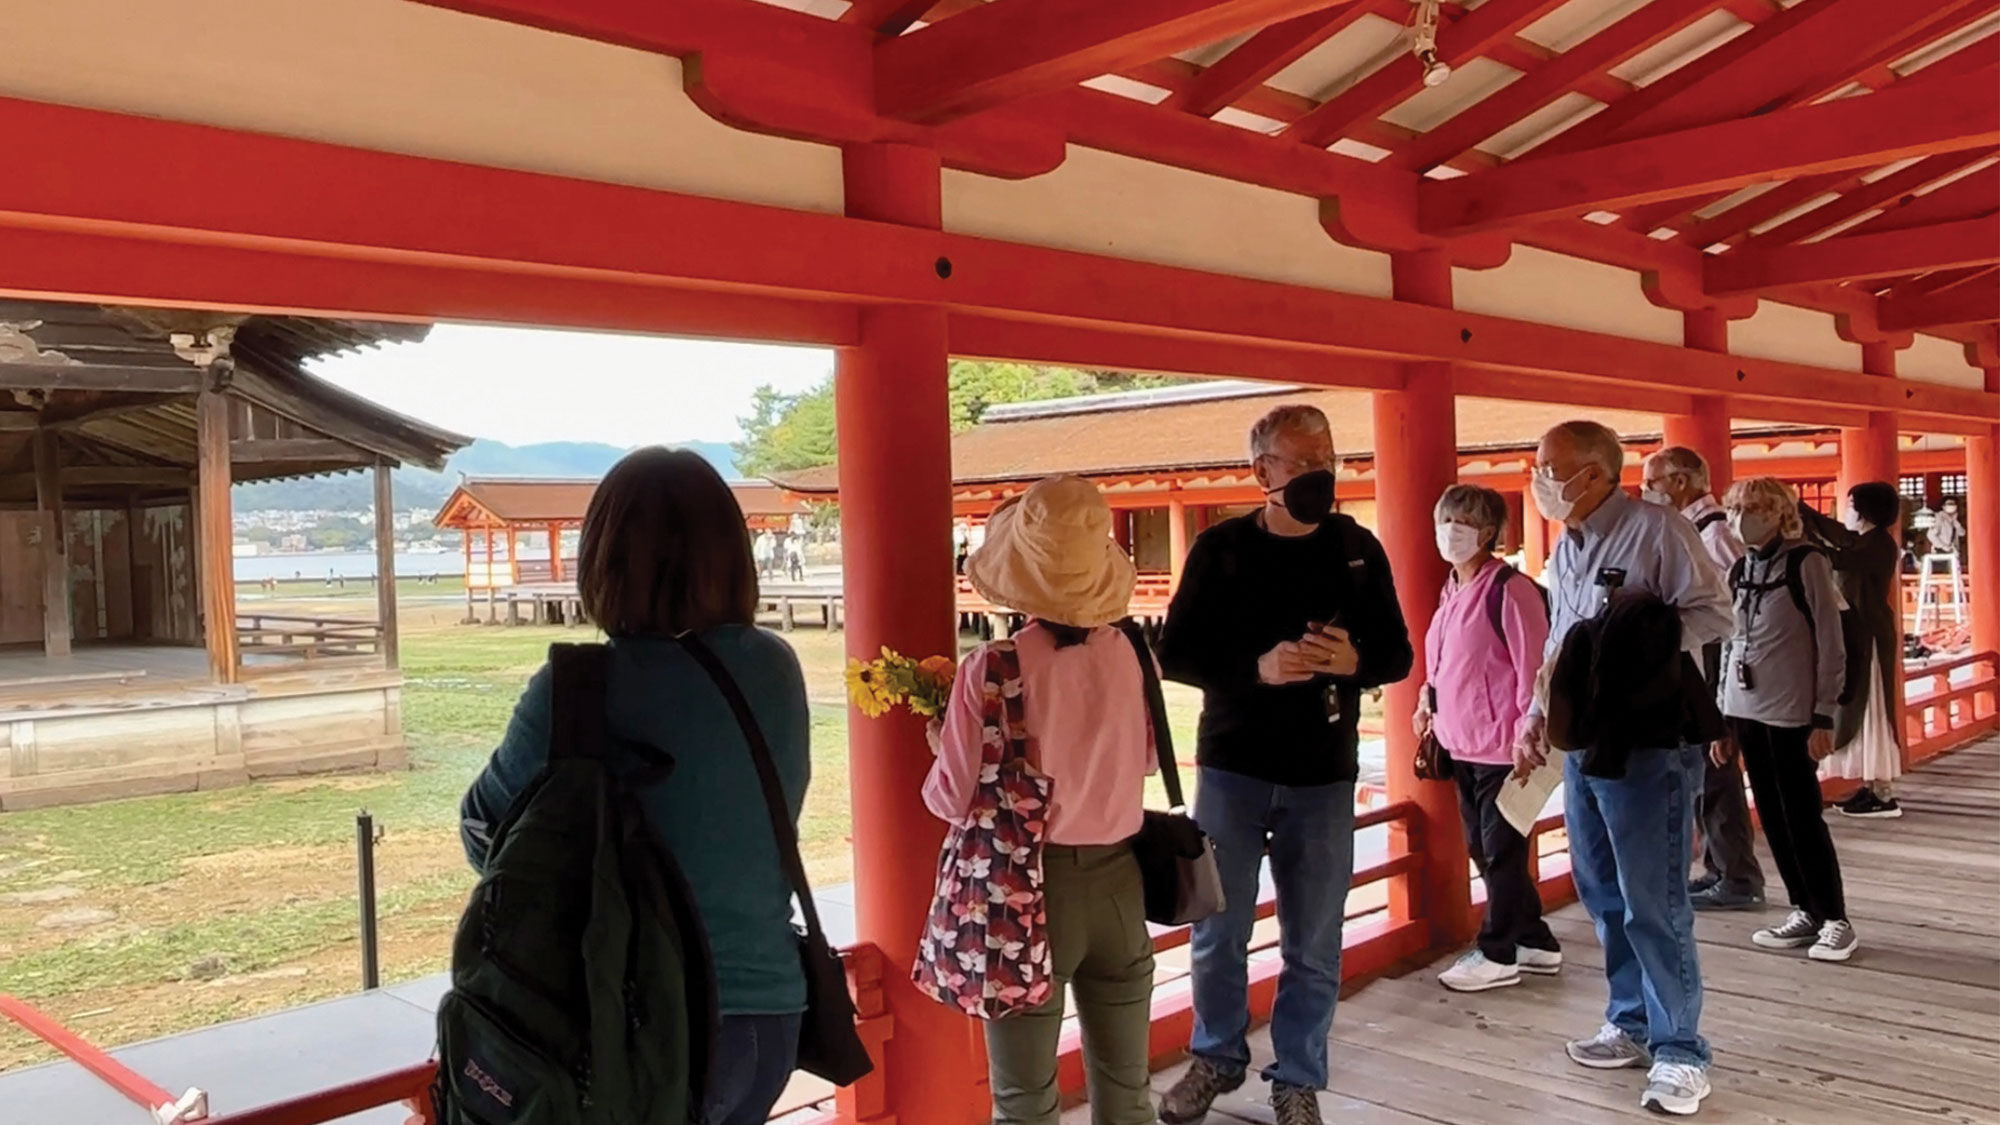 Visitors with an Alexander + Roberts tour group explore the Itsukushima Shinto shrine in Miyajima, Japan.